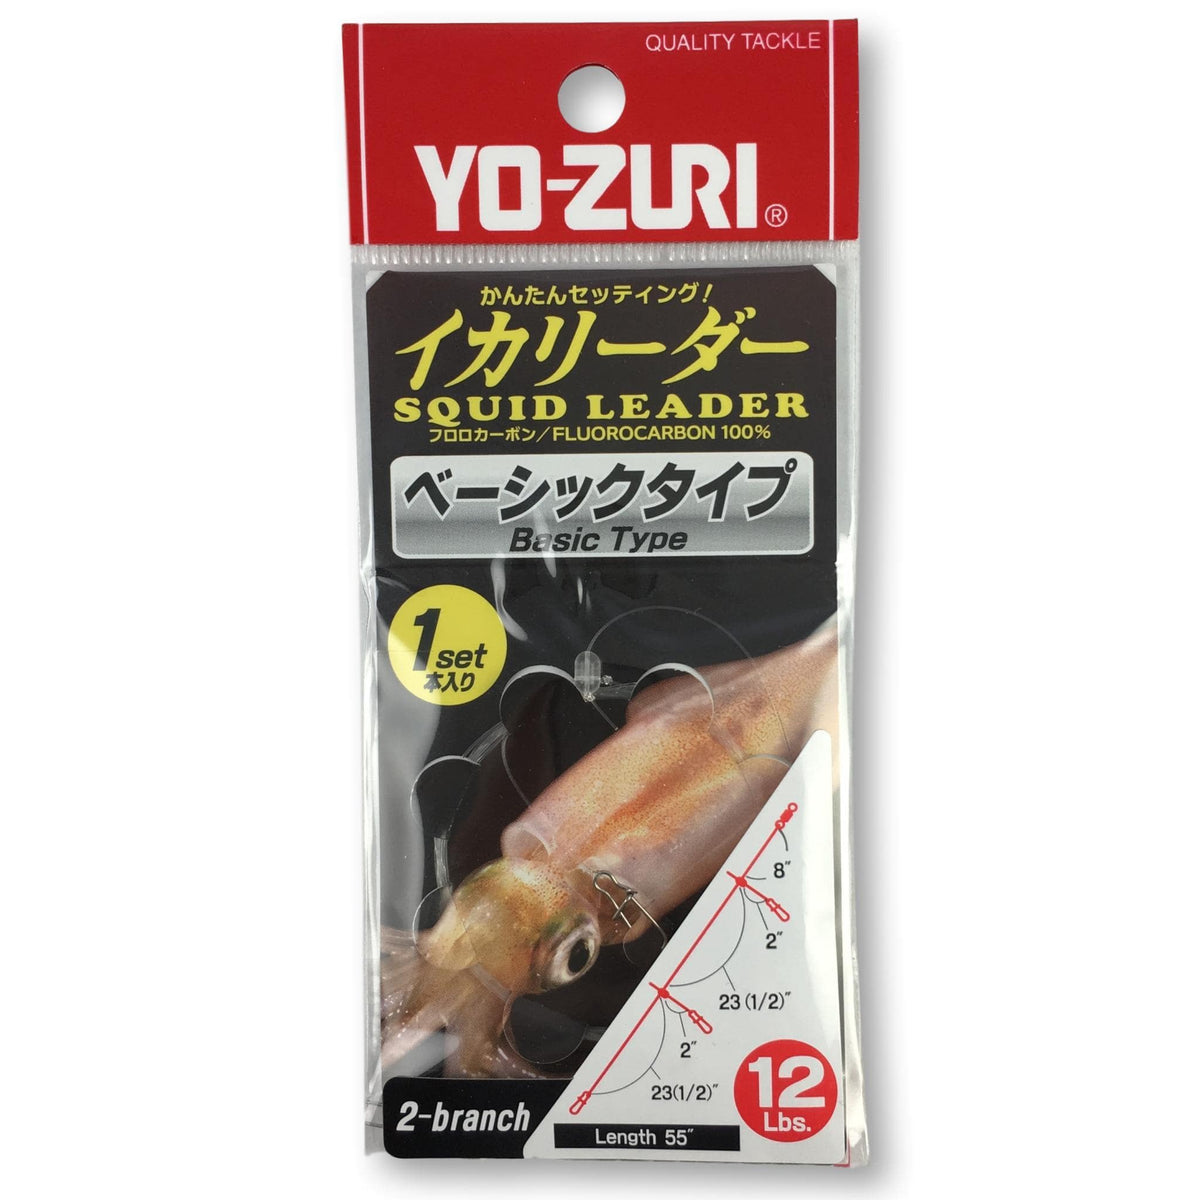 Yo-Zuri Squid Leaders 12 lbs - 1 branch - 2 sets